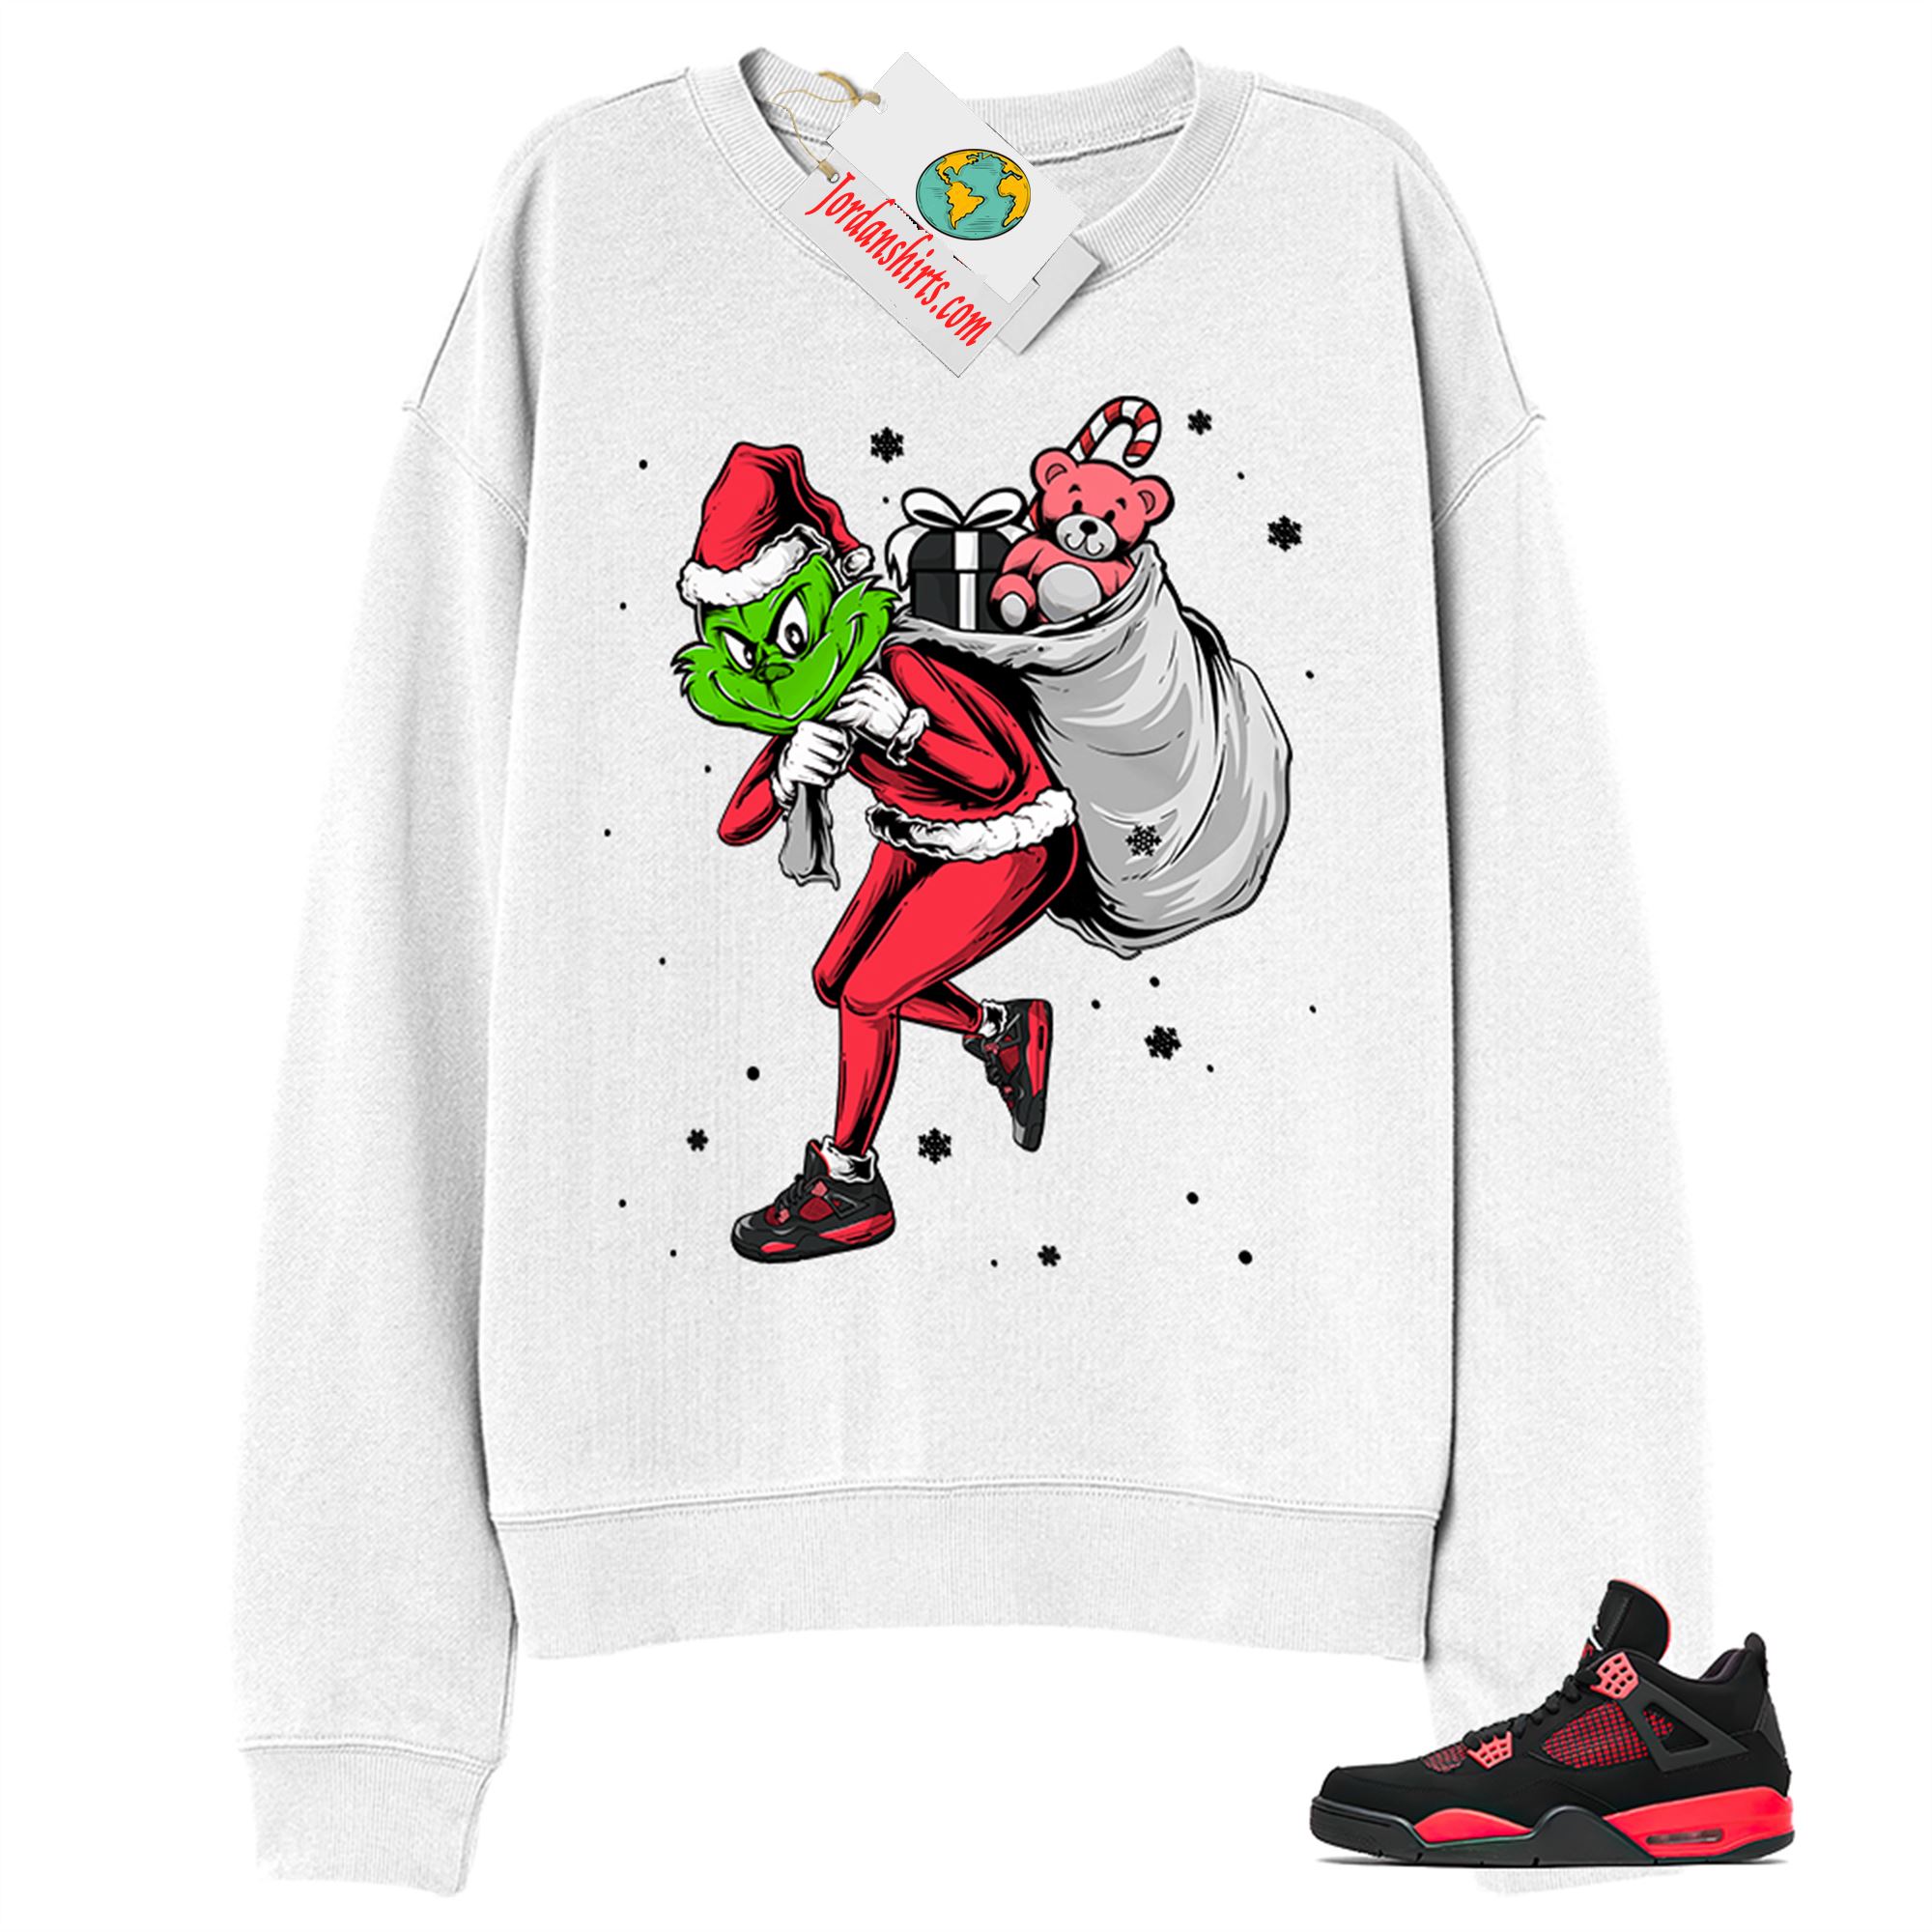 Jordan 4 Sweatshirt, Grinch Stolen Christmas White Sweatshirt Air Jordan 4 Red Thunder 4s Size Up To 5xl